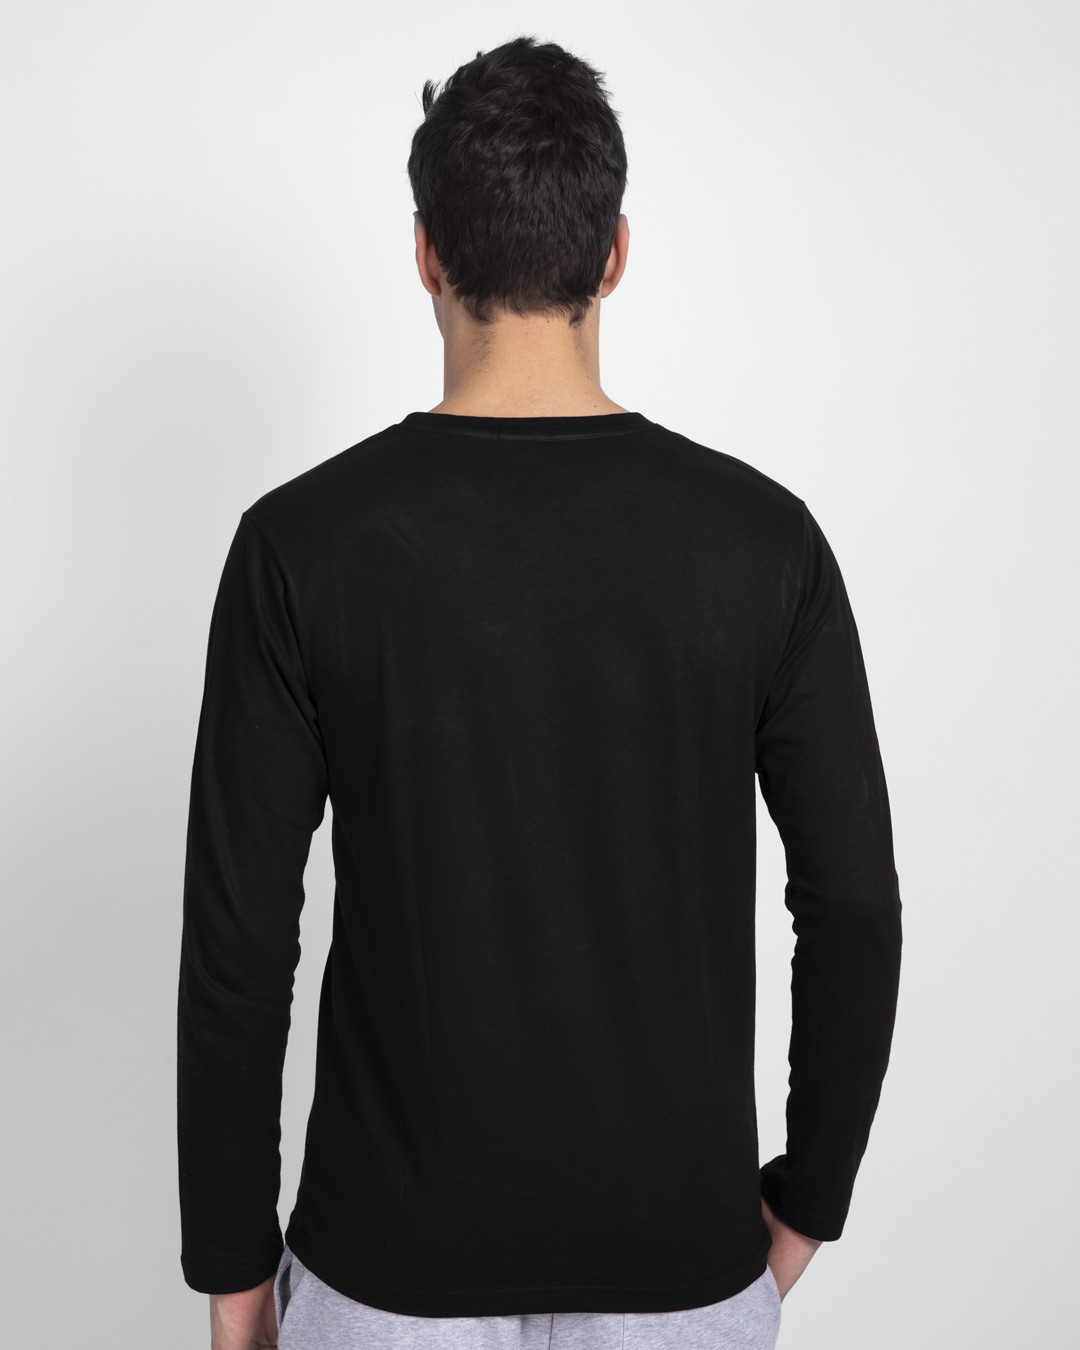 Shop Create Good Stories Full Sleeve T-Shirt Black-Back